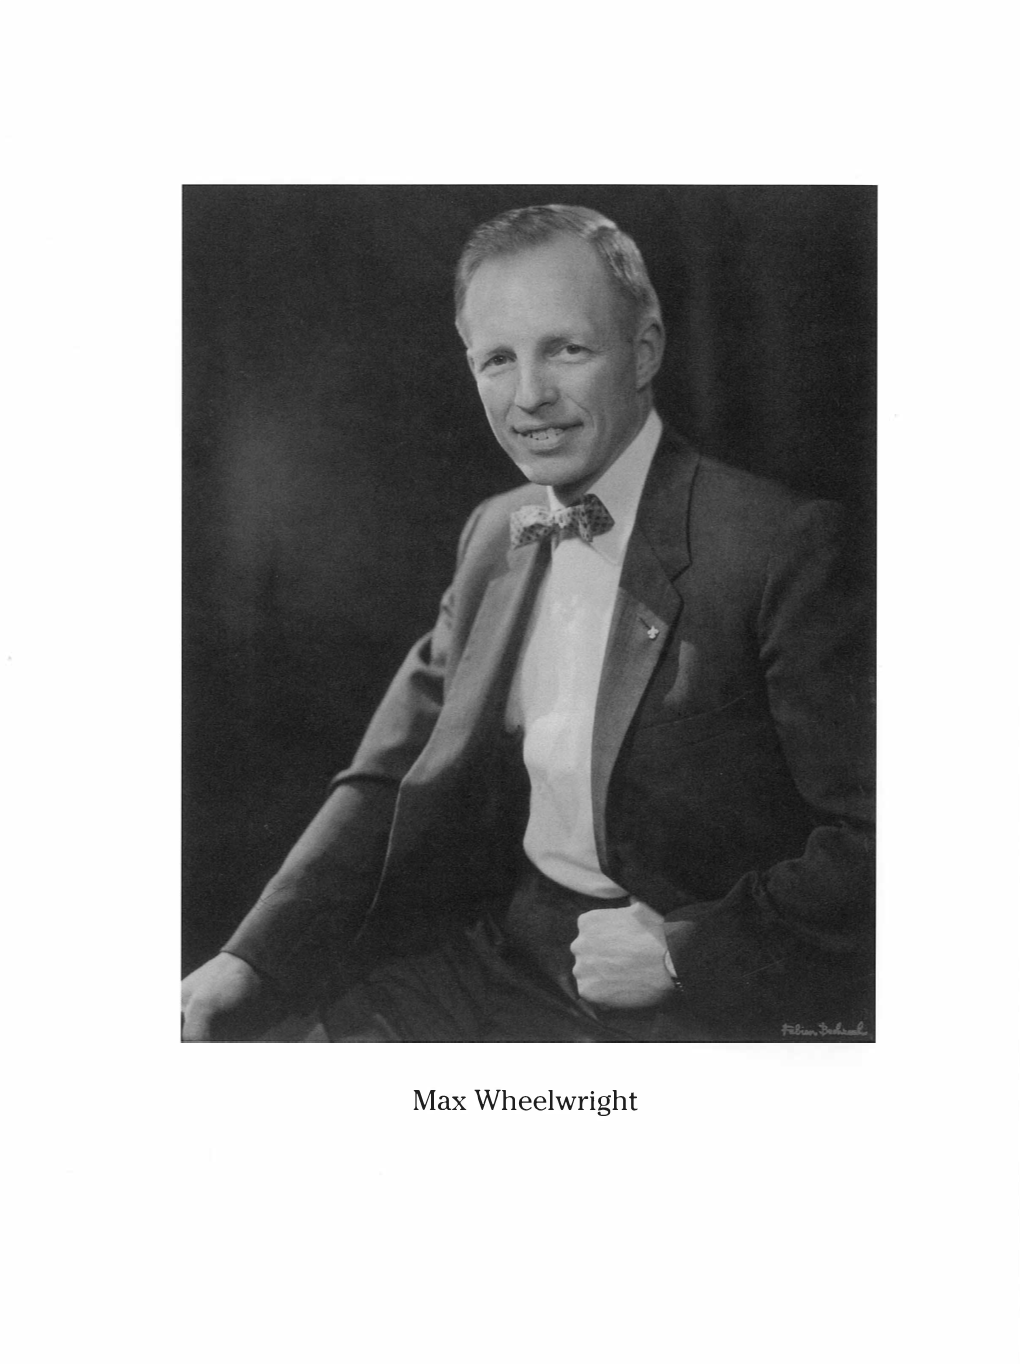 Max Wheelwright Max Wheelwright Student, Teacher, Chairman of the Board